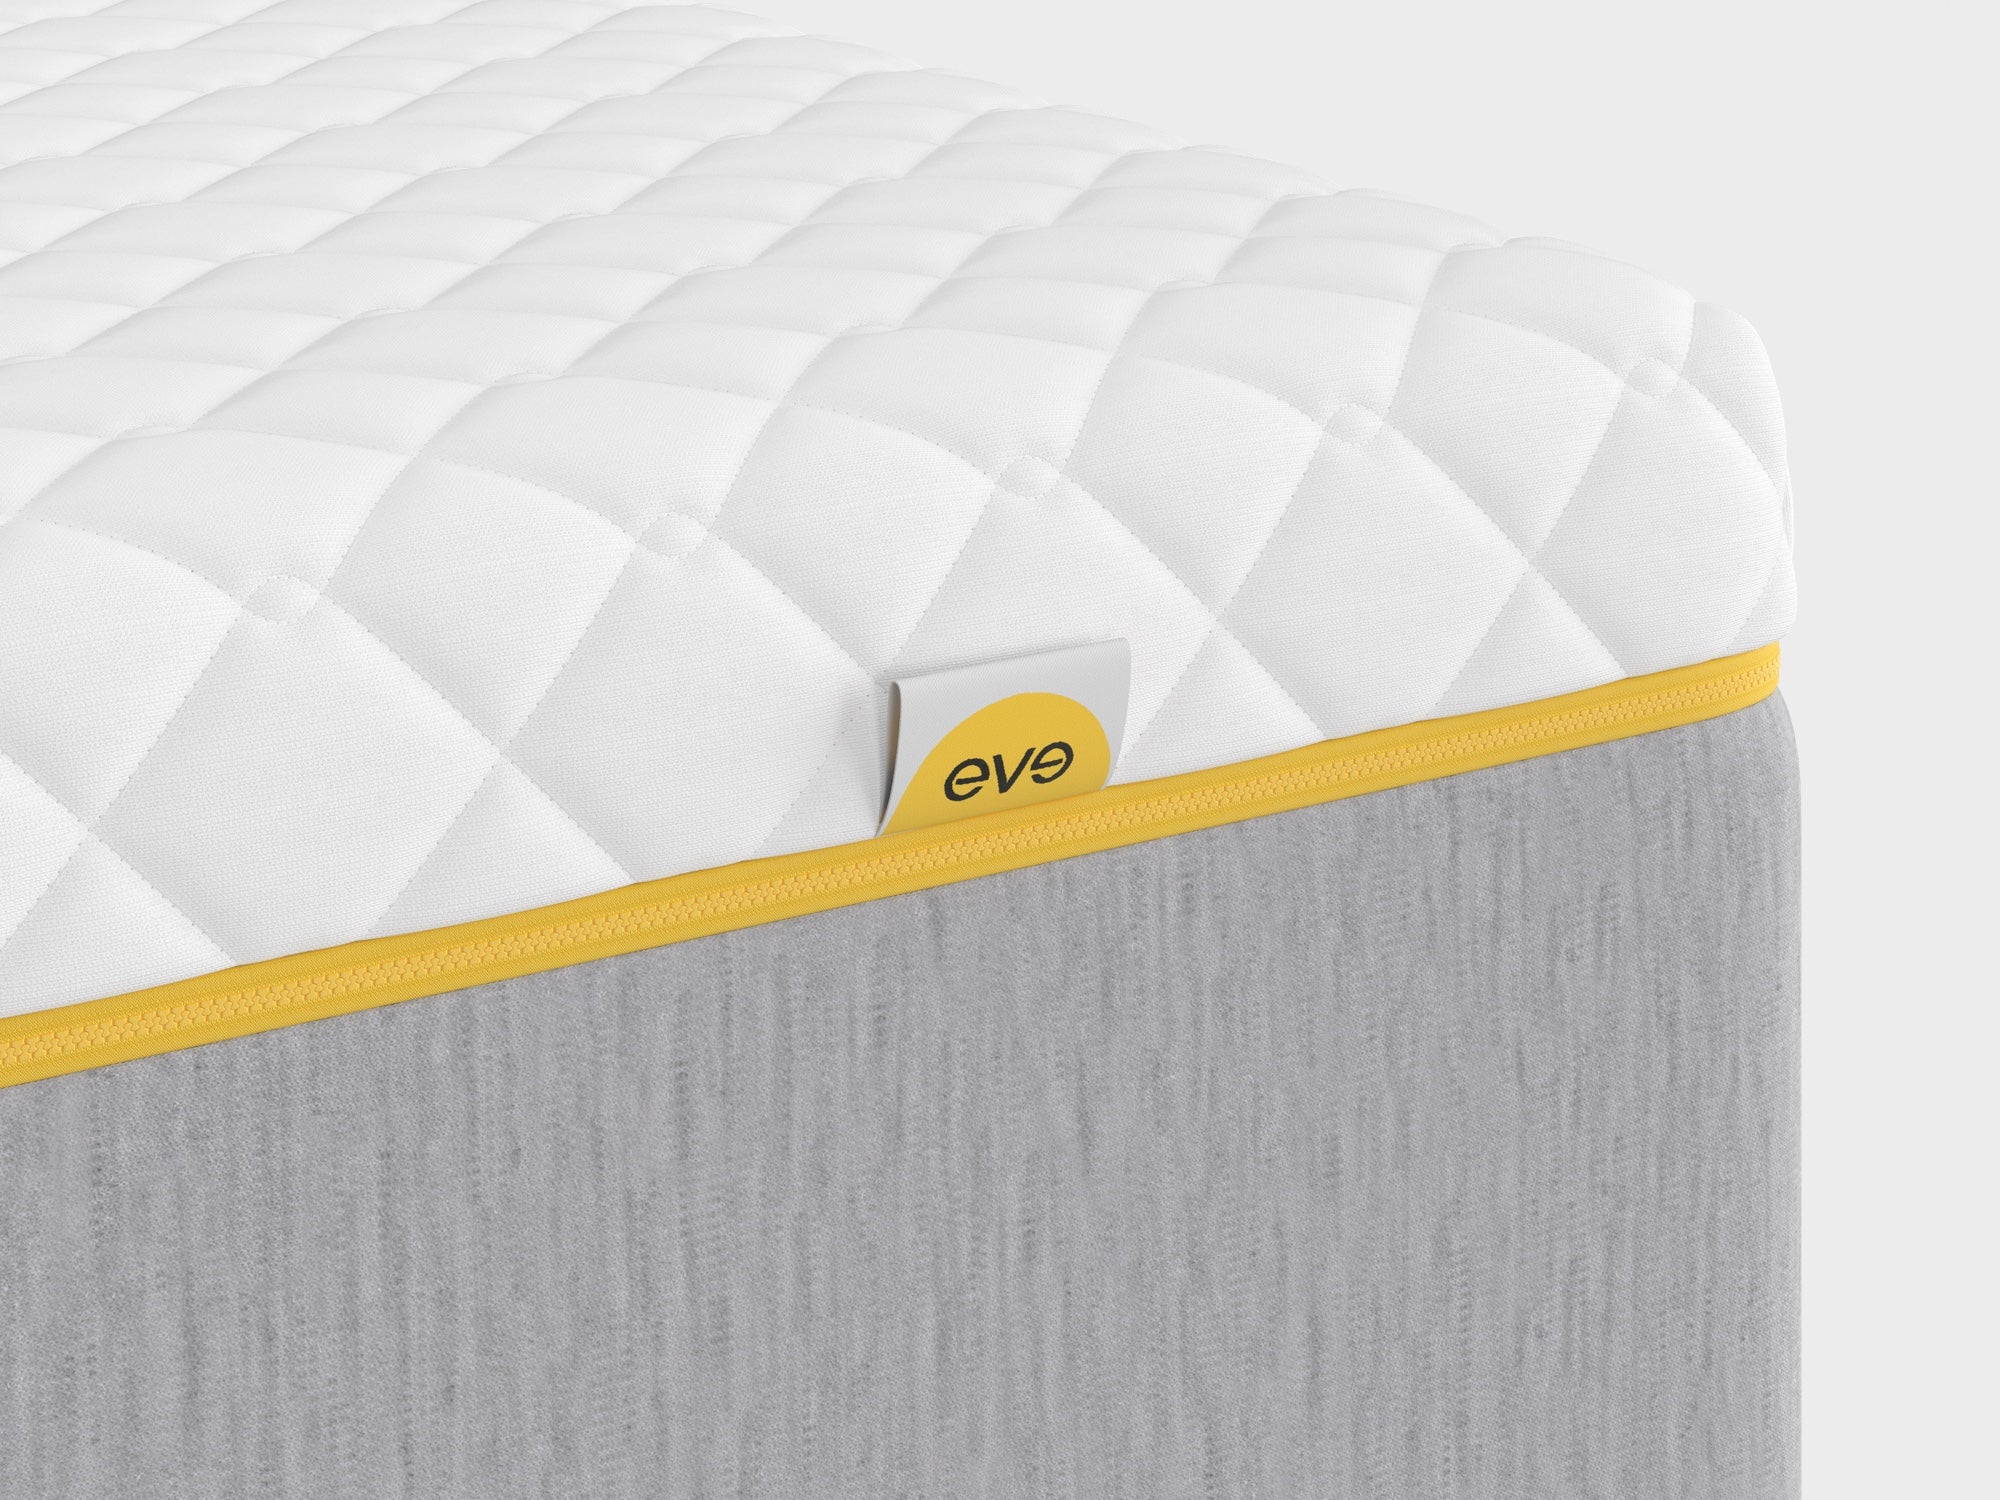 the wunderflip premium memory foam mattress